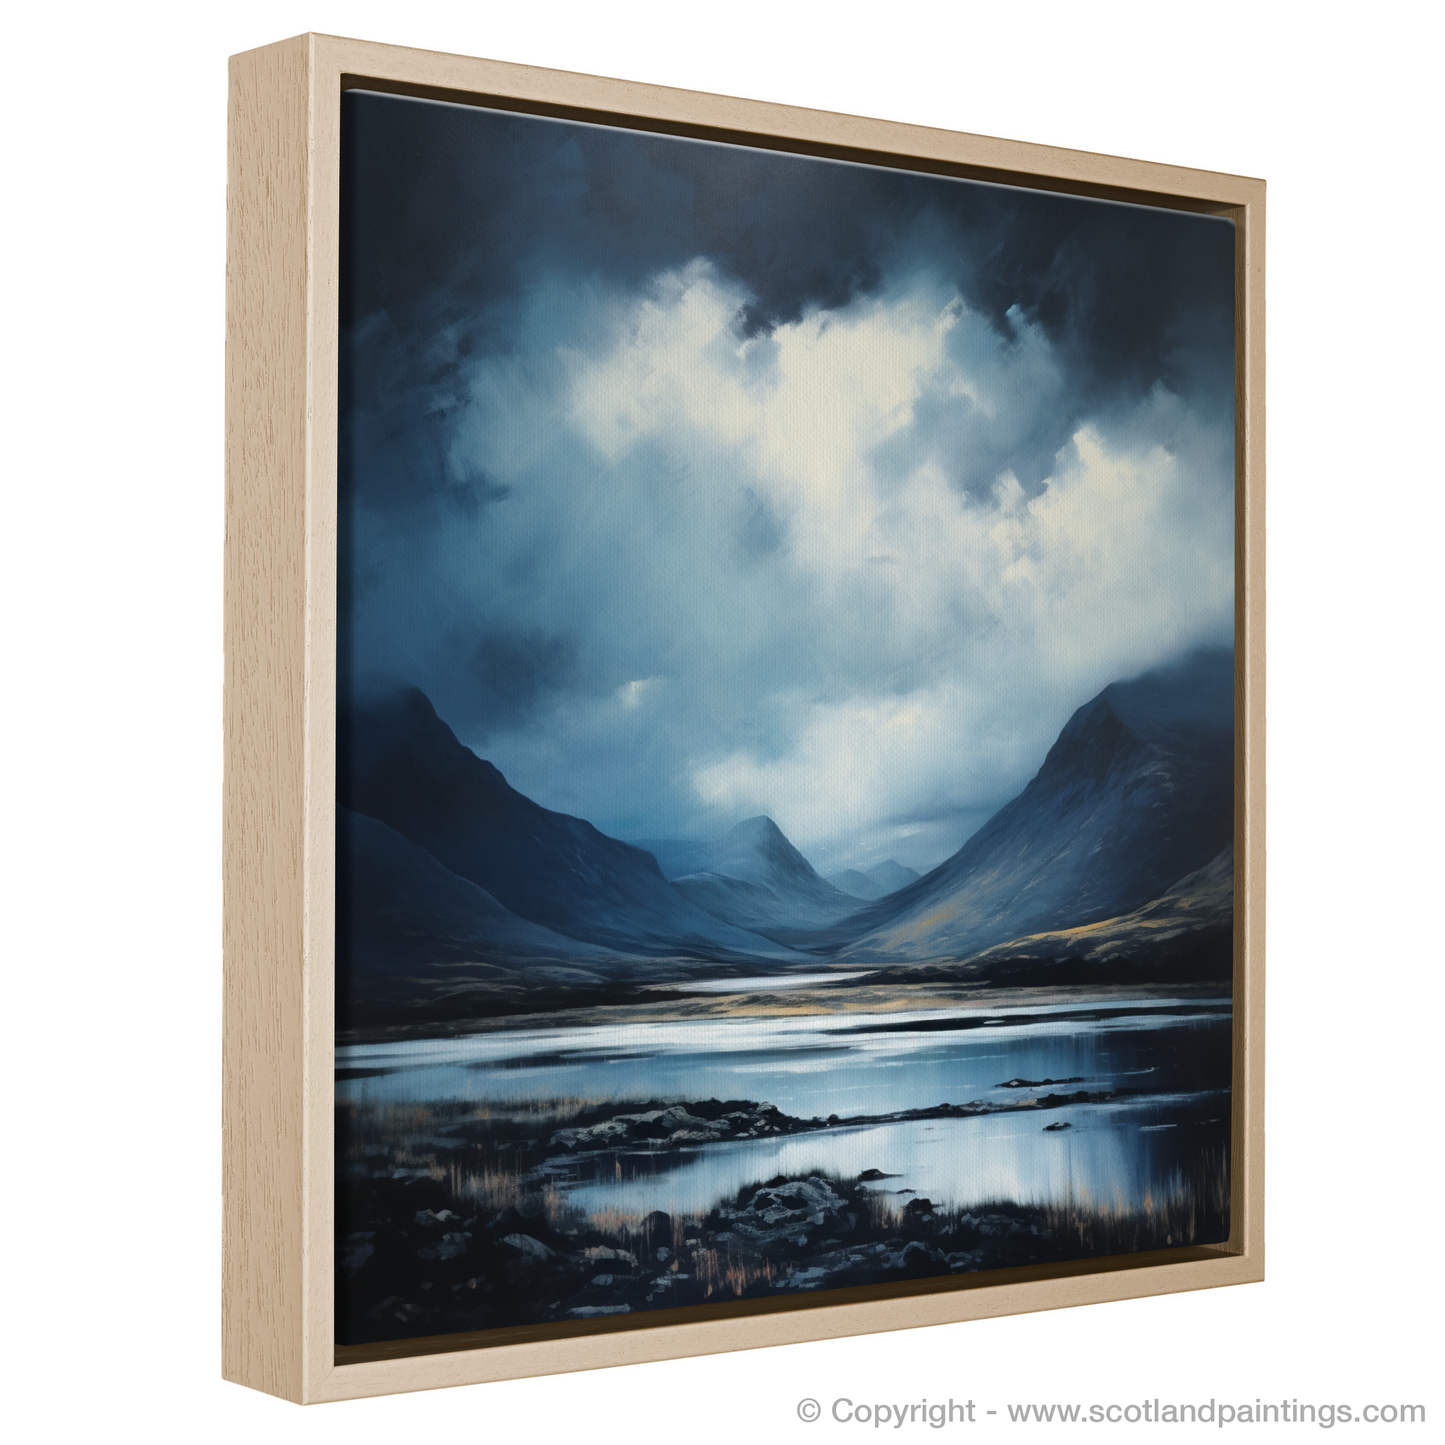 Dramatic Skies Over Glencoe: A Minimalist Interpretation